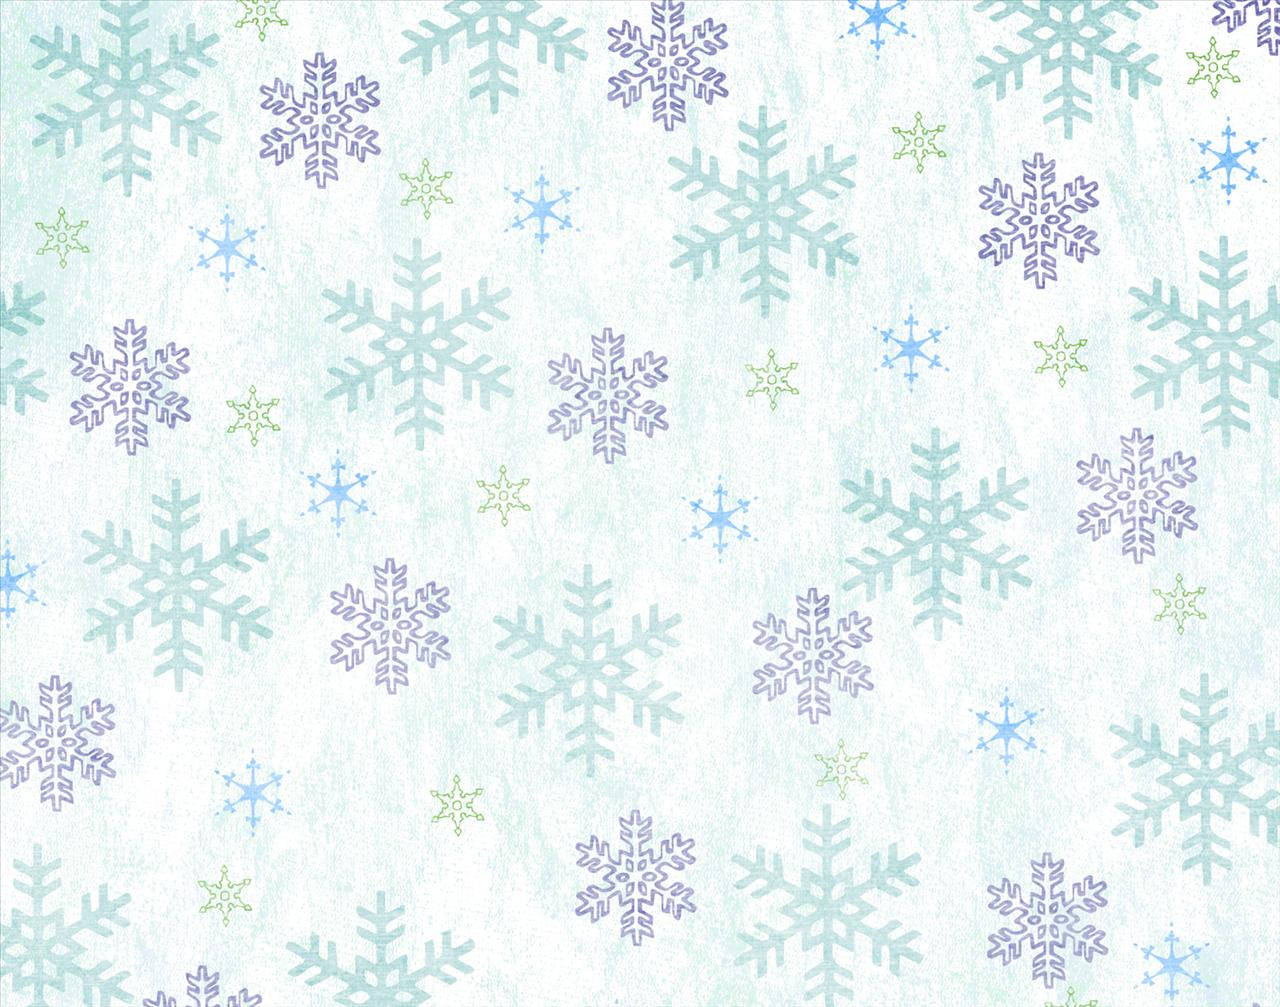 Variety Of Snowflakes Design